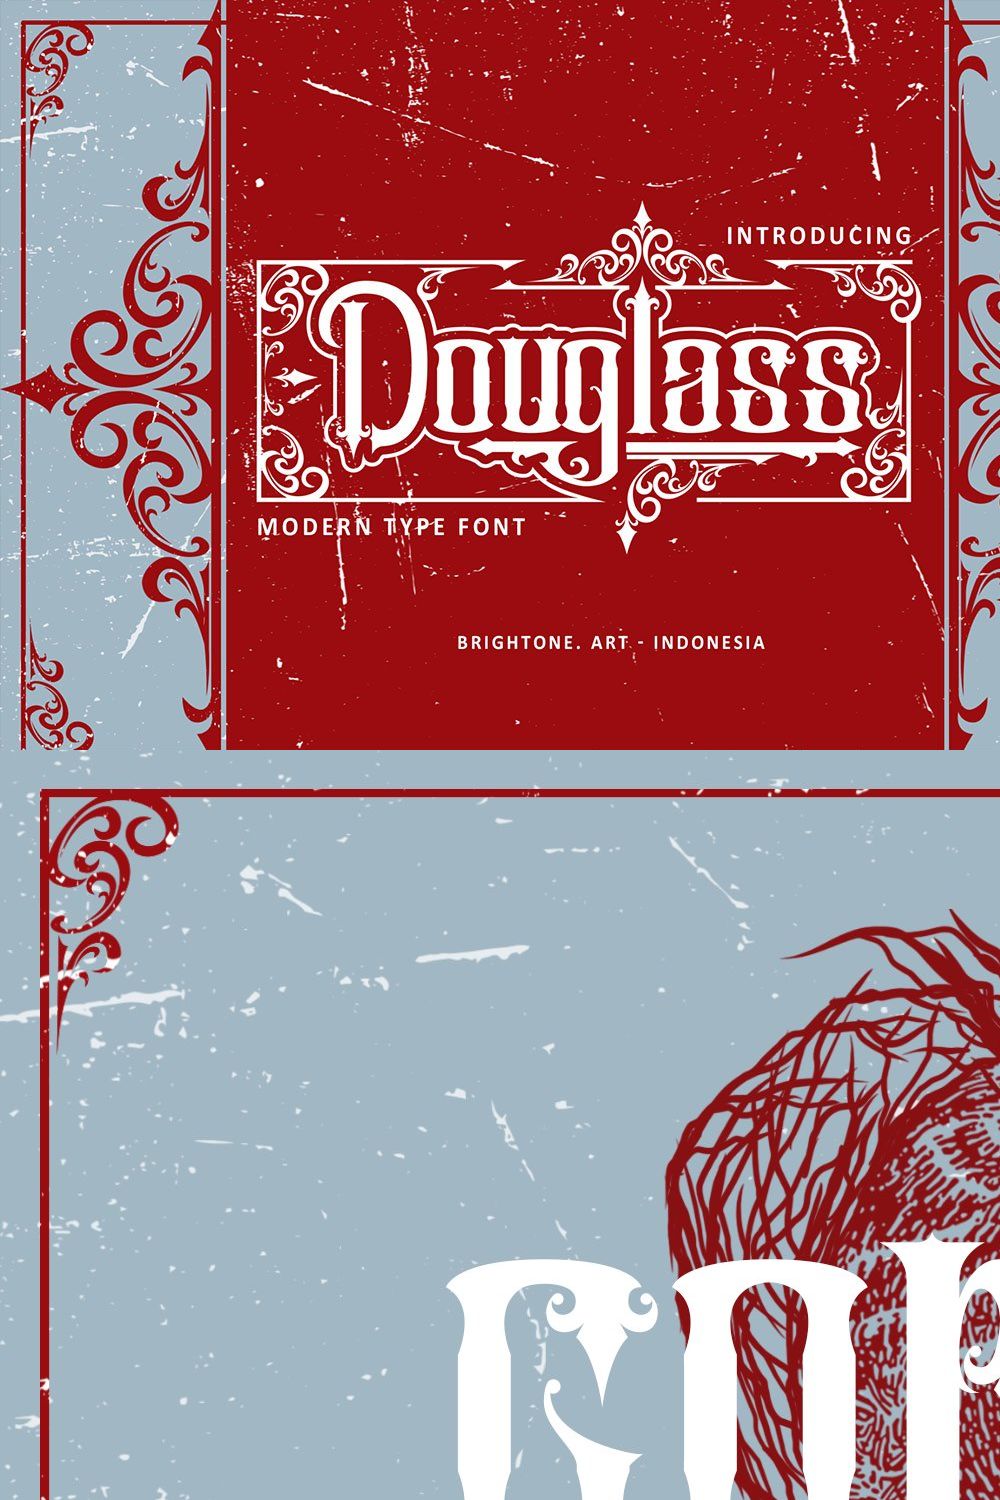 Douglass - blackletter pinterest preview image.